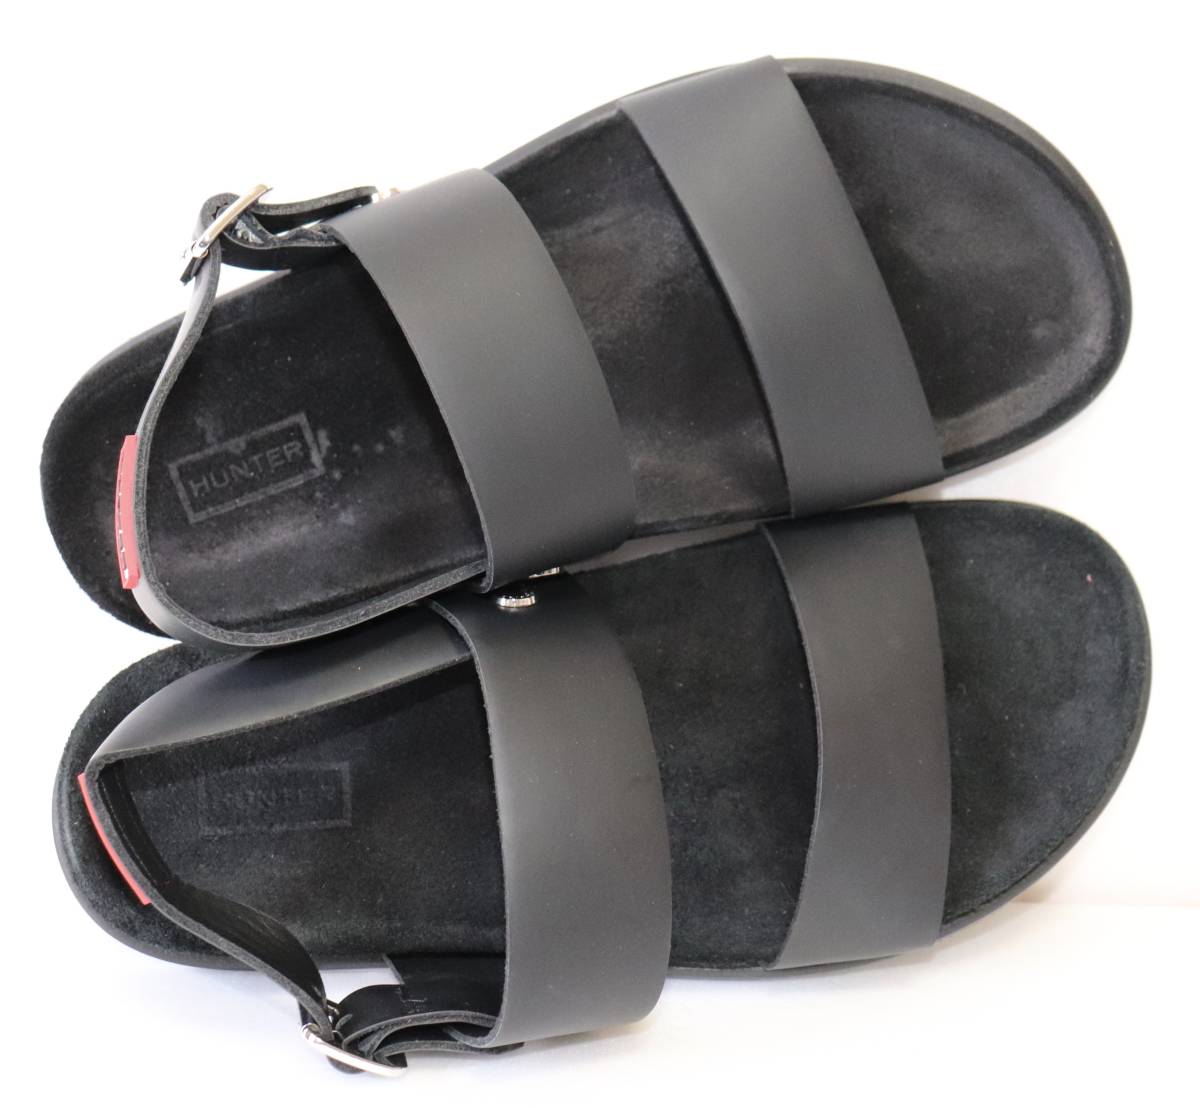  regular price 25300 new goods genuine article HUNTER WOMENS CONTOURED SANDAL sandals WFD4020RUL JP25 UK6 US8 EU39 6009